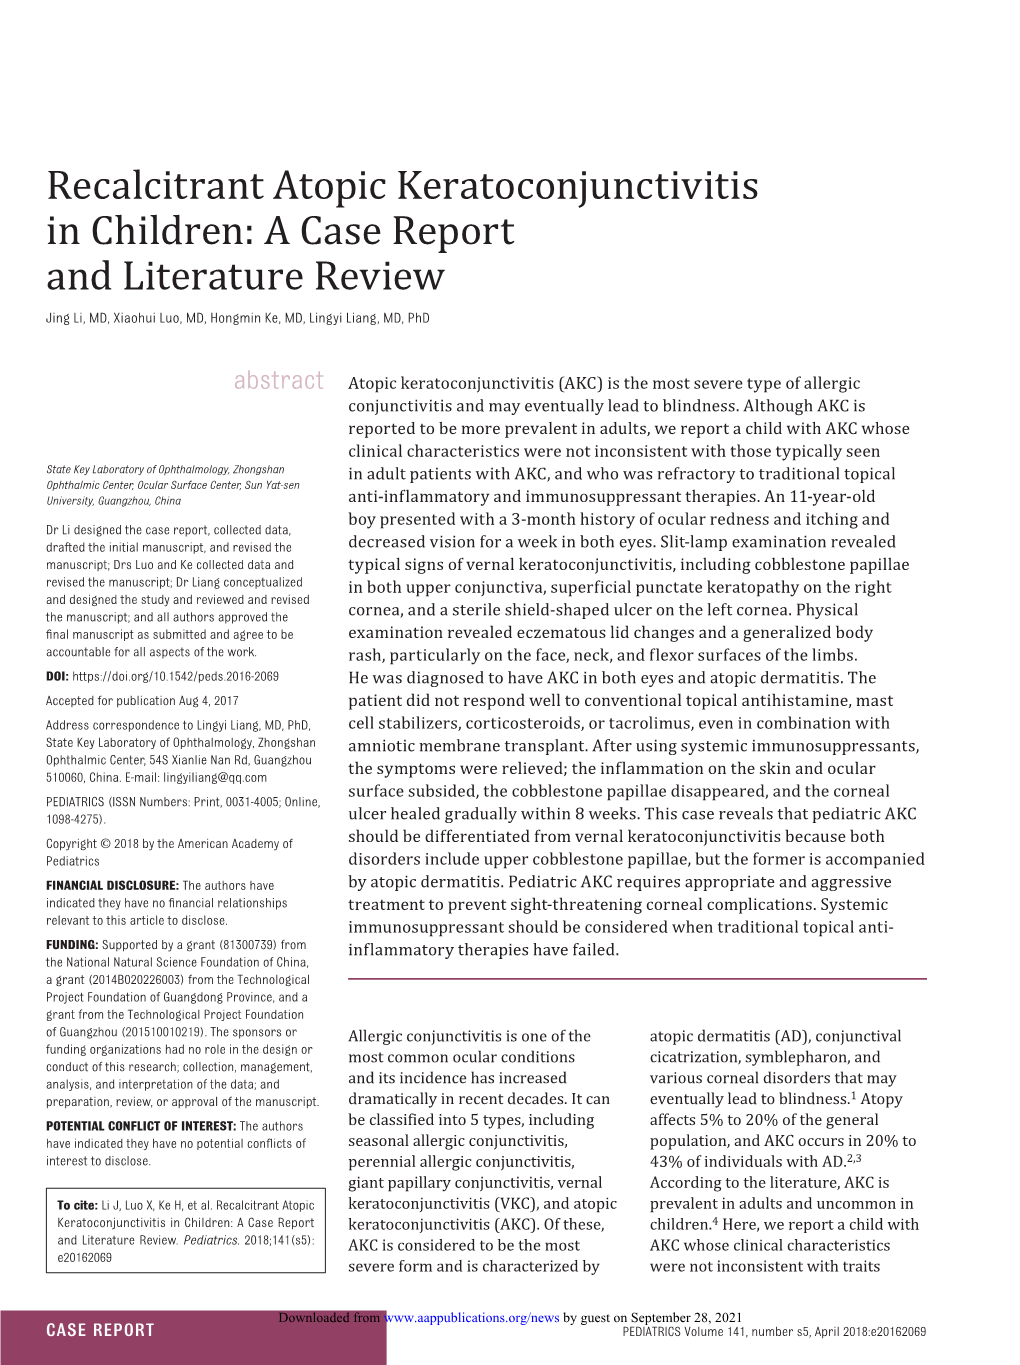 Recalcitrant Atopic Keratoconjunctivitis in Children: A